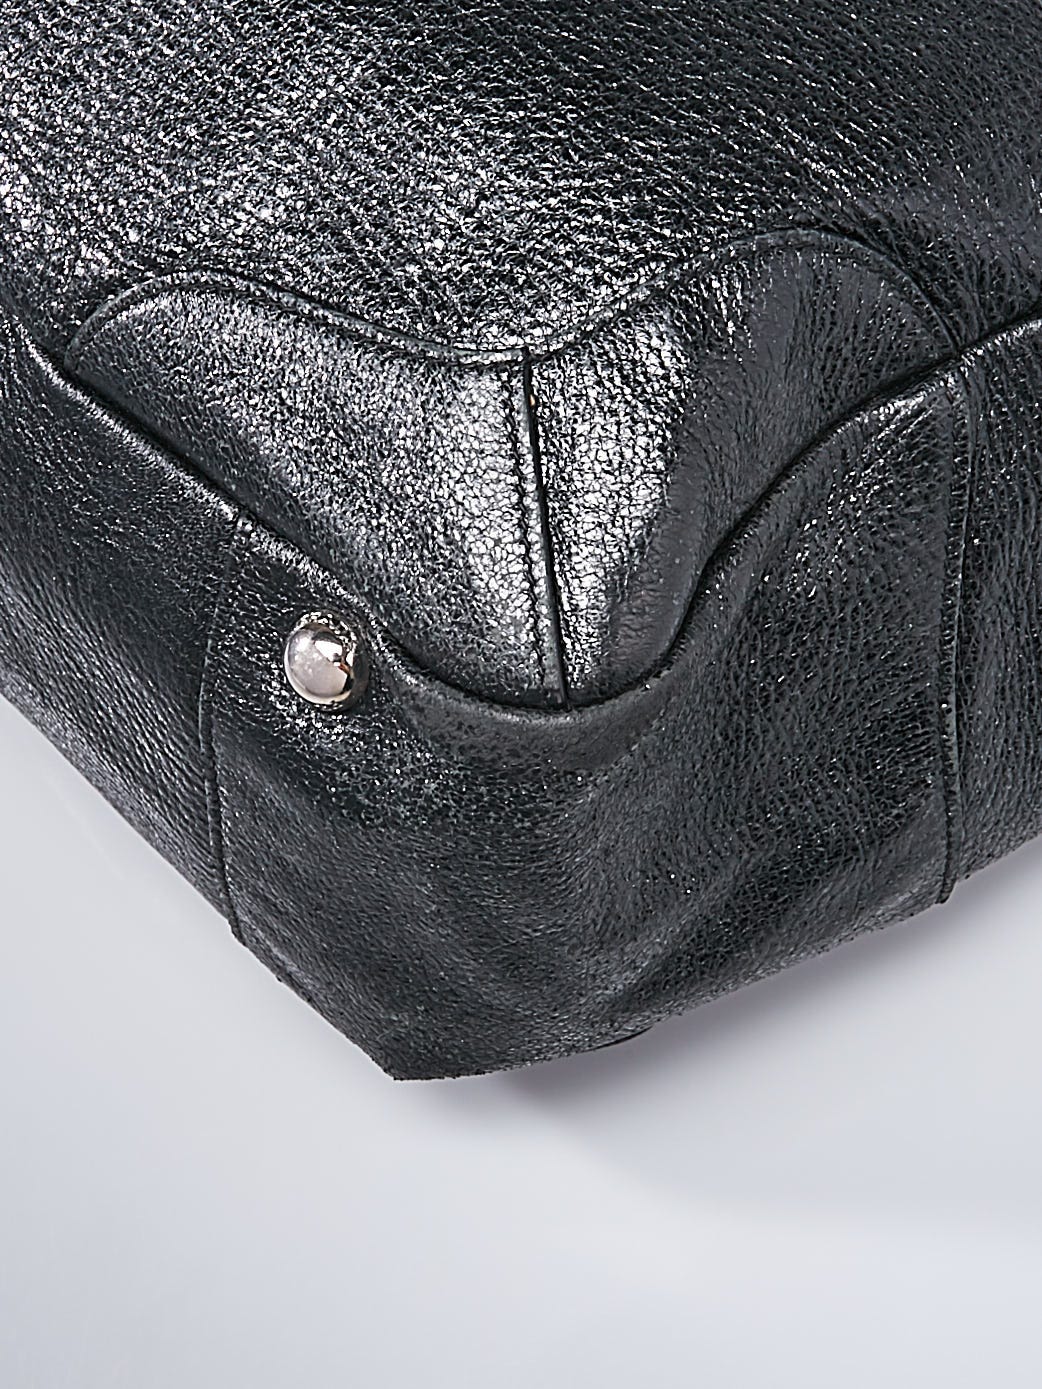 Authentic PRADA CERVO LUX Leather Chain Shoulder Tote Bag BR4242 Beige 7334G